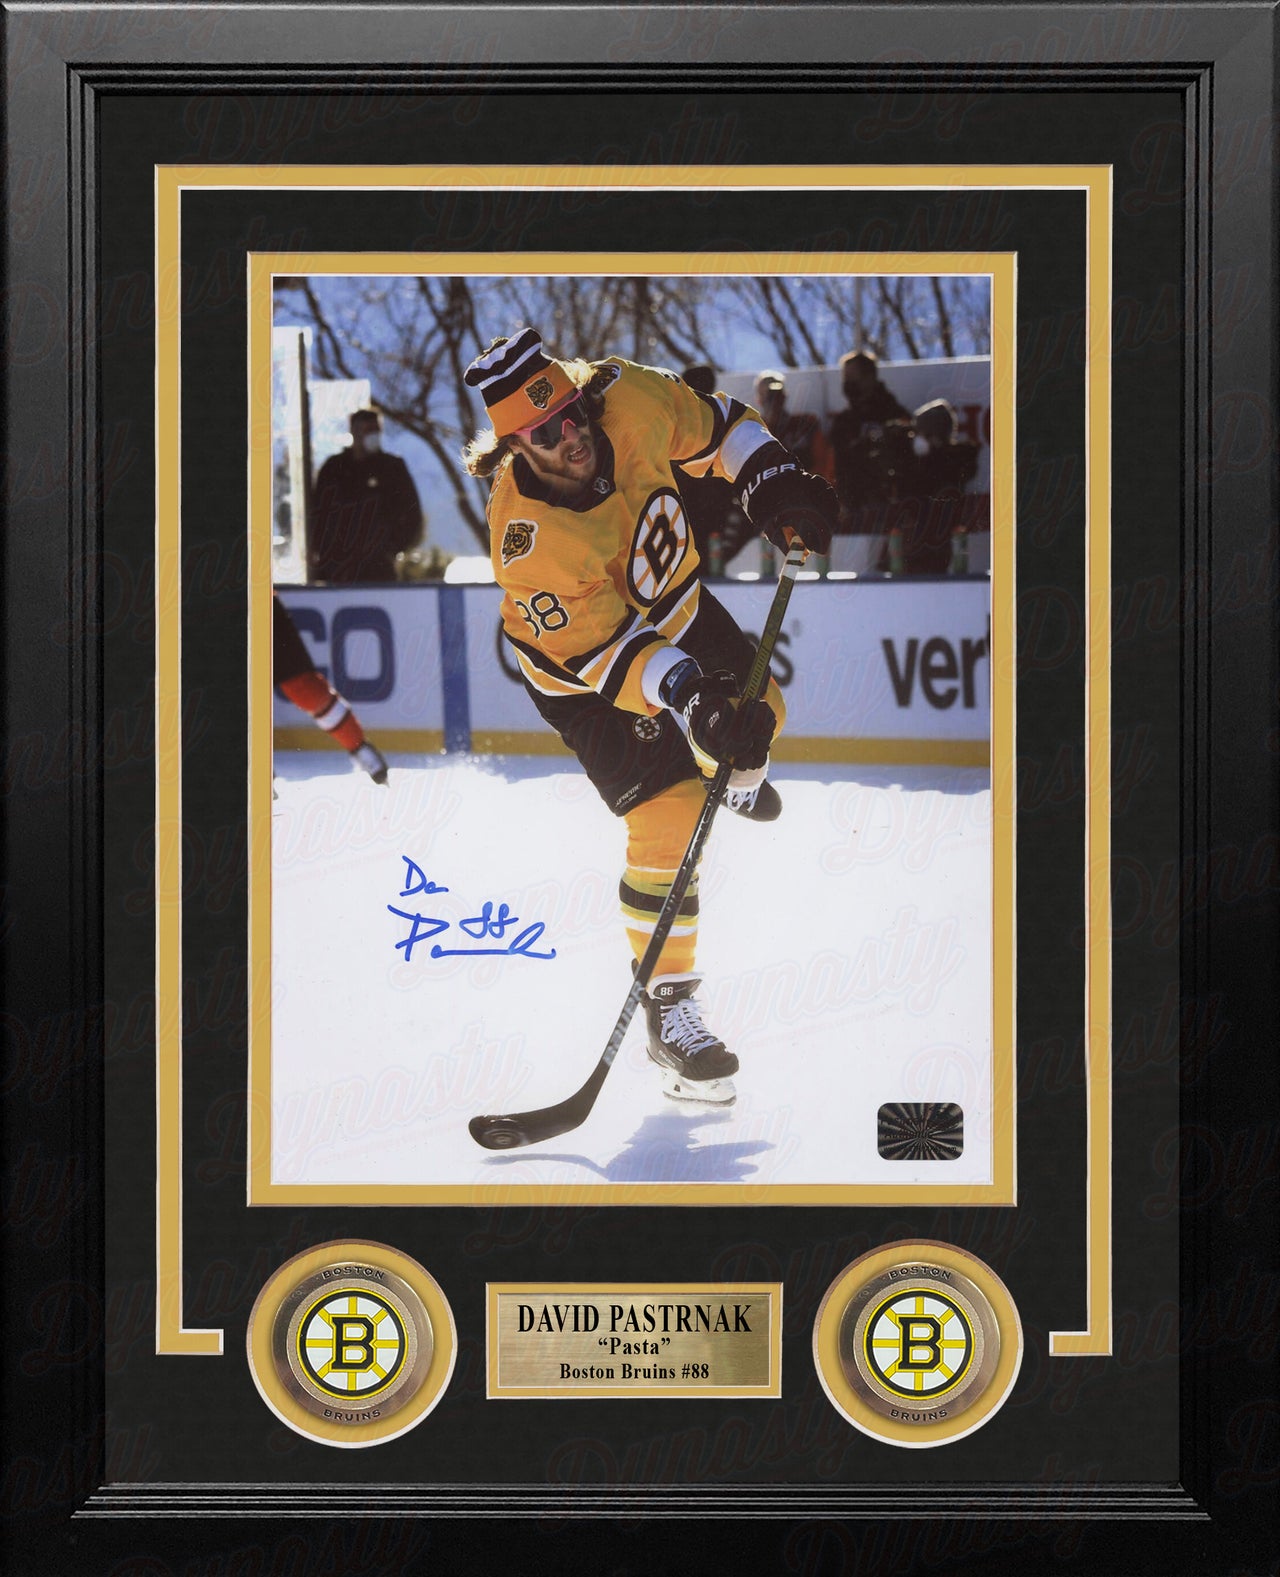 David Pastrnak Lake Tahoe Warm-Up Autographed Boston Bruins 8" x 10" Framed Hockey Photo